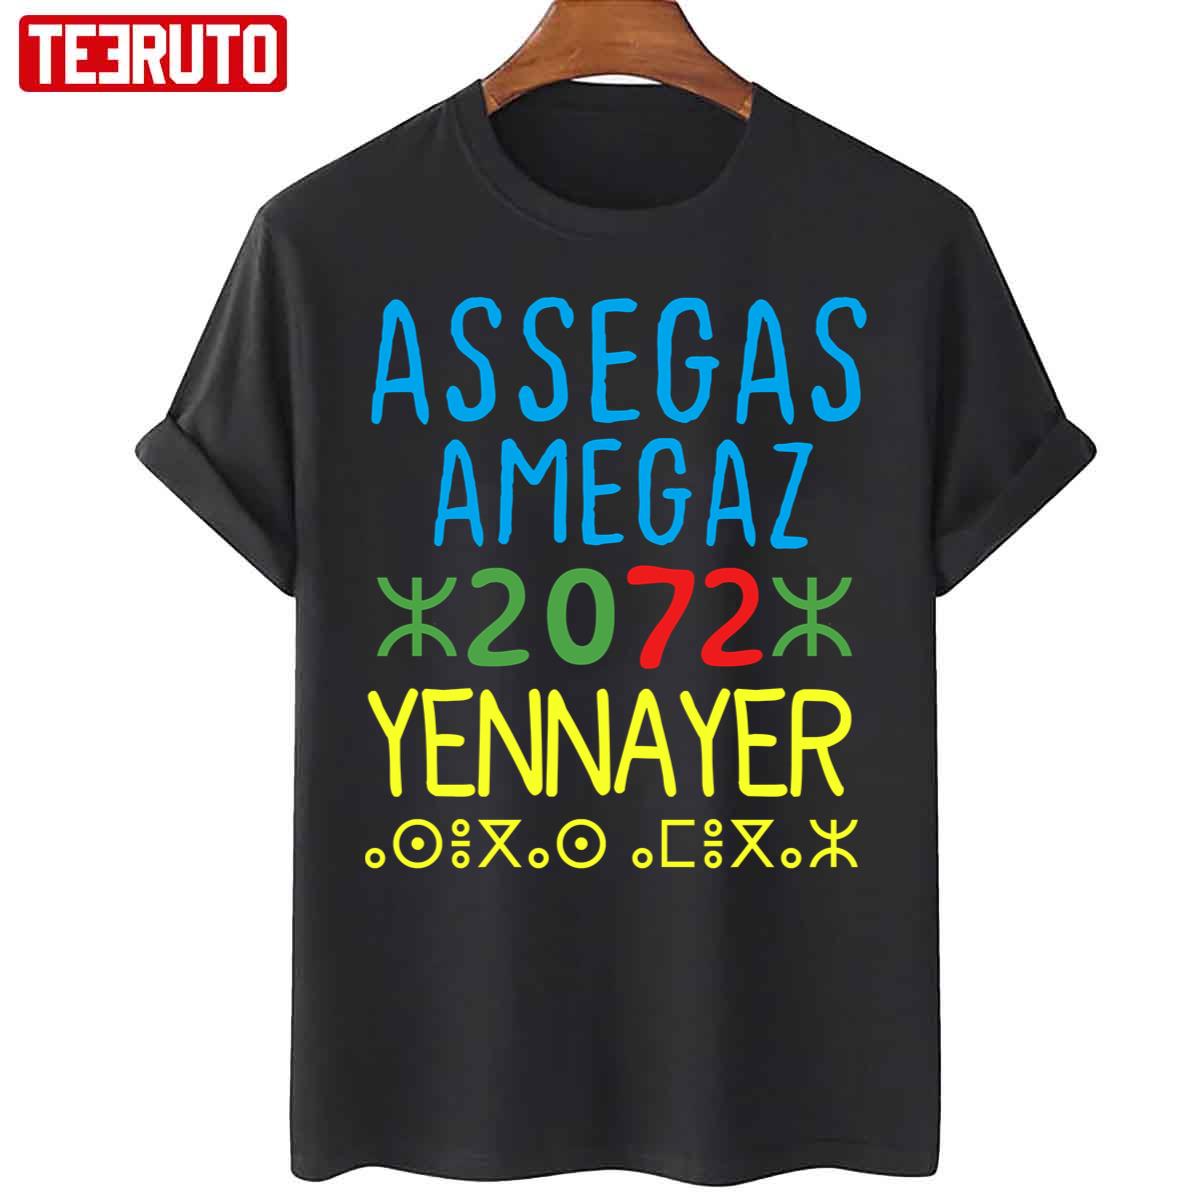 Assegas Ameggaz Yennayer Berber New Year Amazigh 2072 Unisex T-Shirt